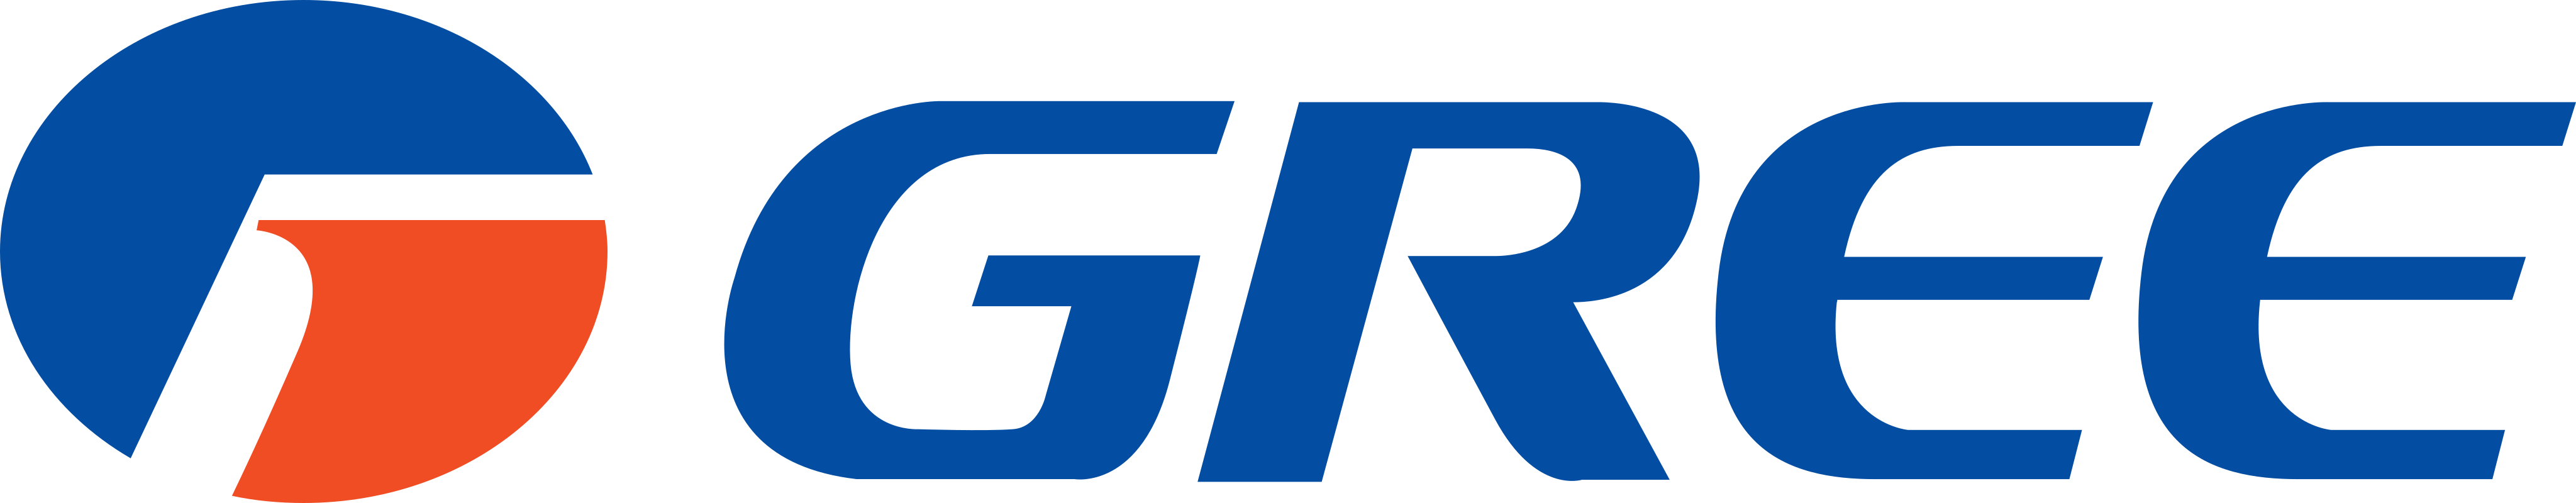 gree-logo